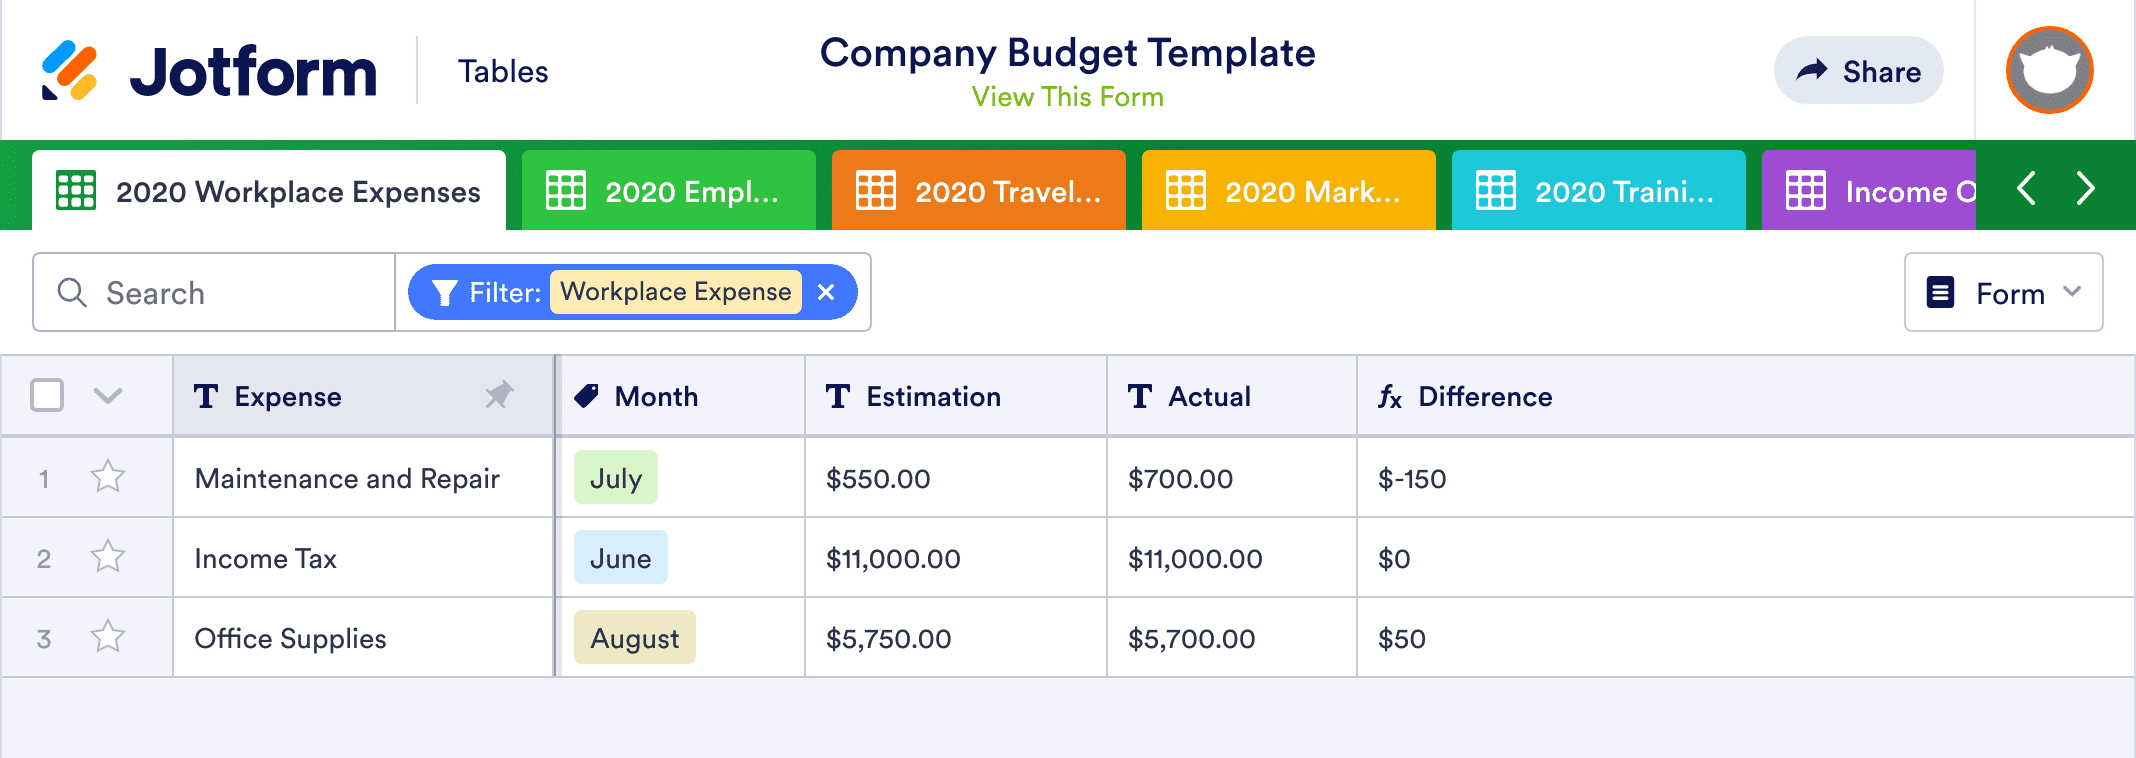 Company Budget Template